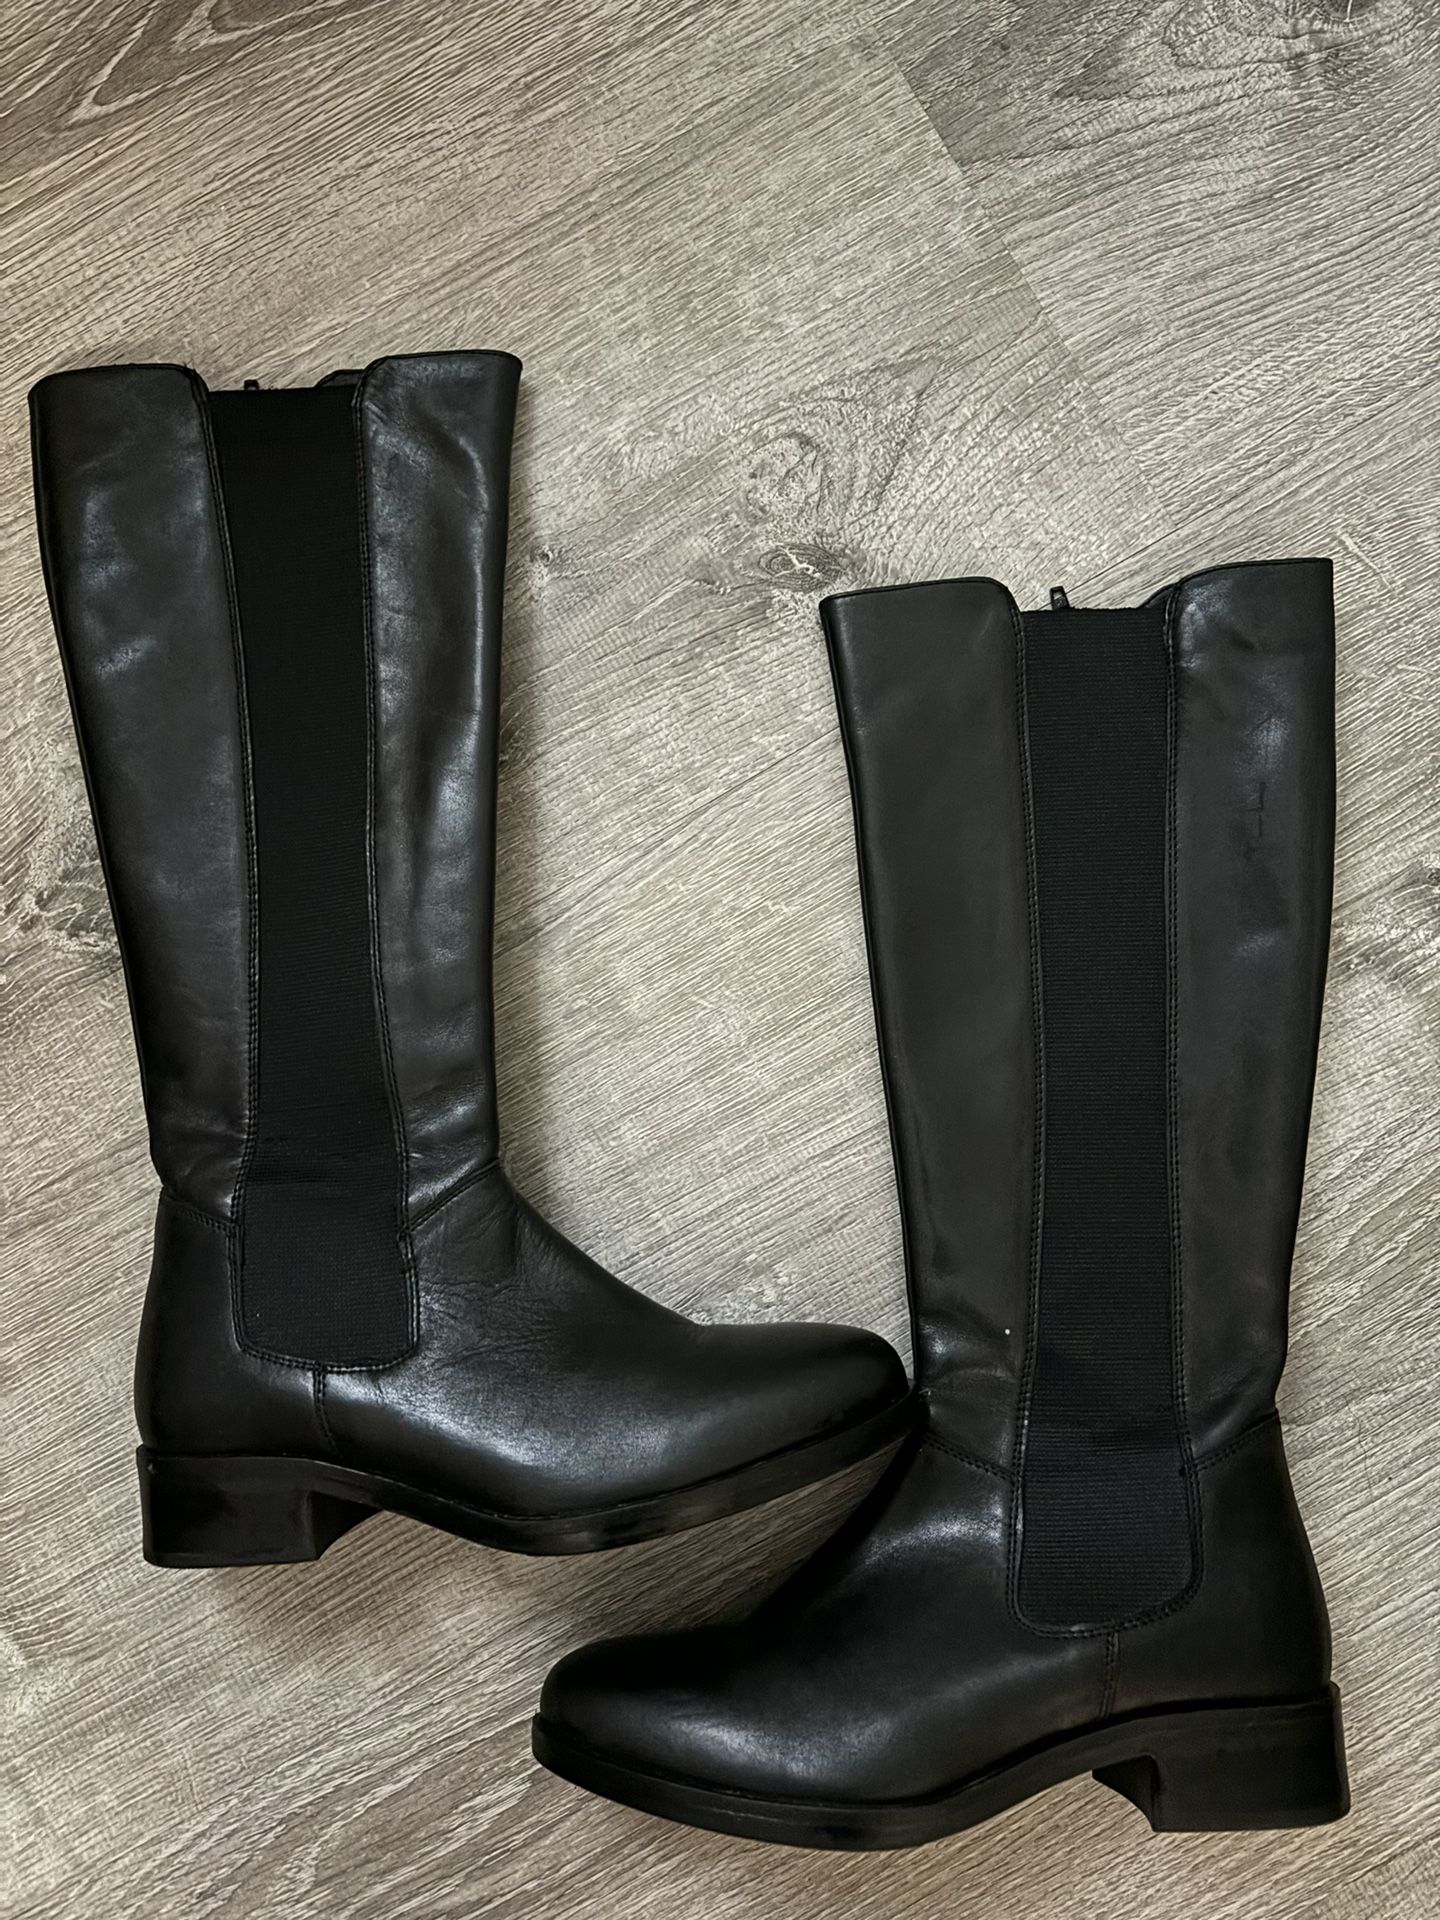 Women Aldo Boots Size 7.5